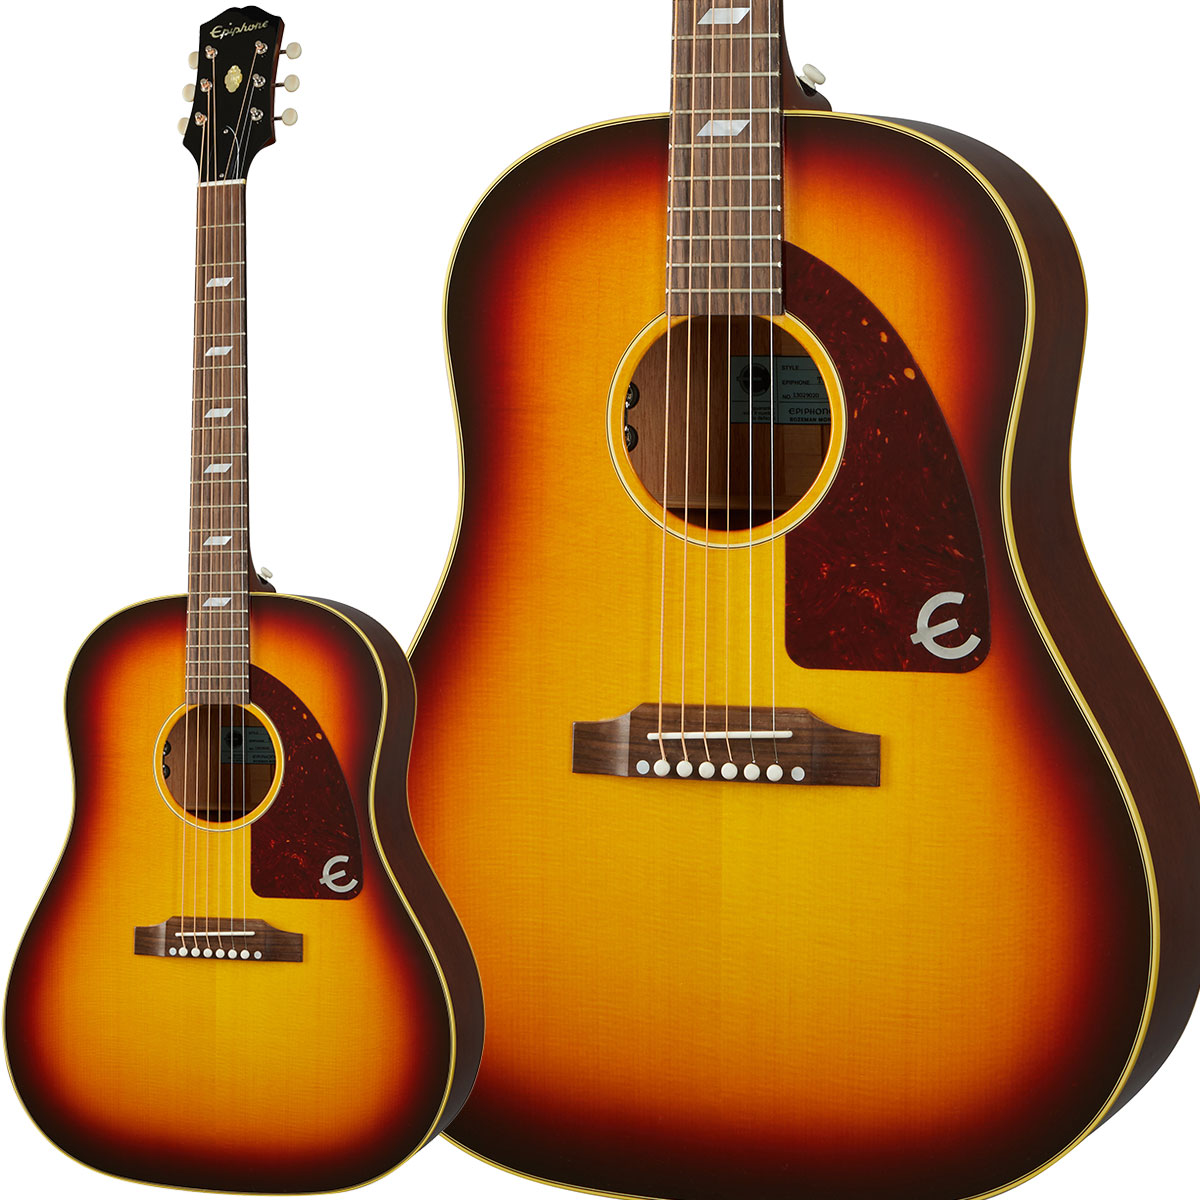 Epiphone USA Texan Vintage Sunburst アコースティックギター USA